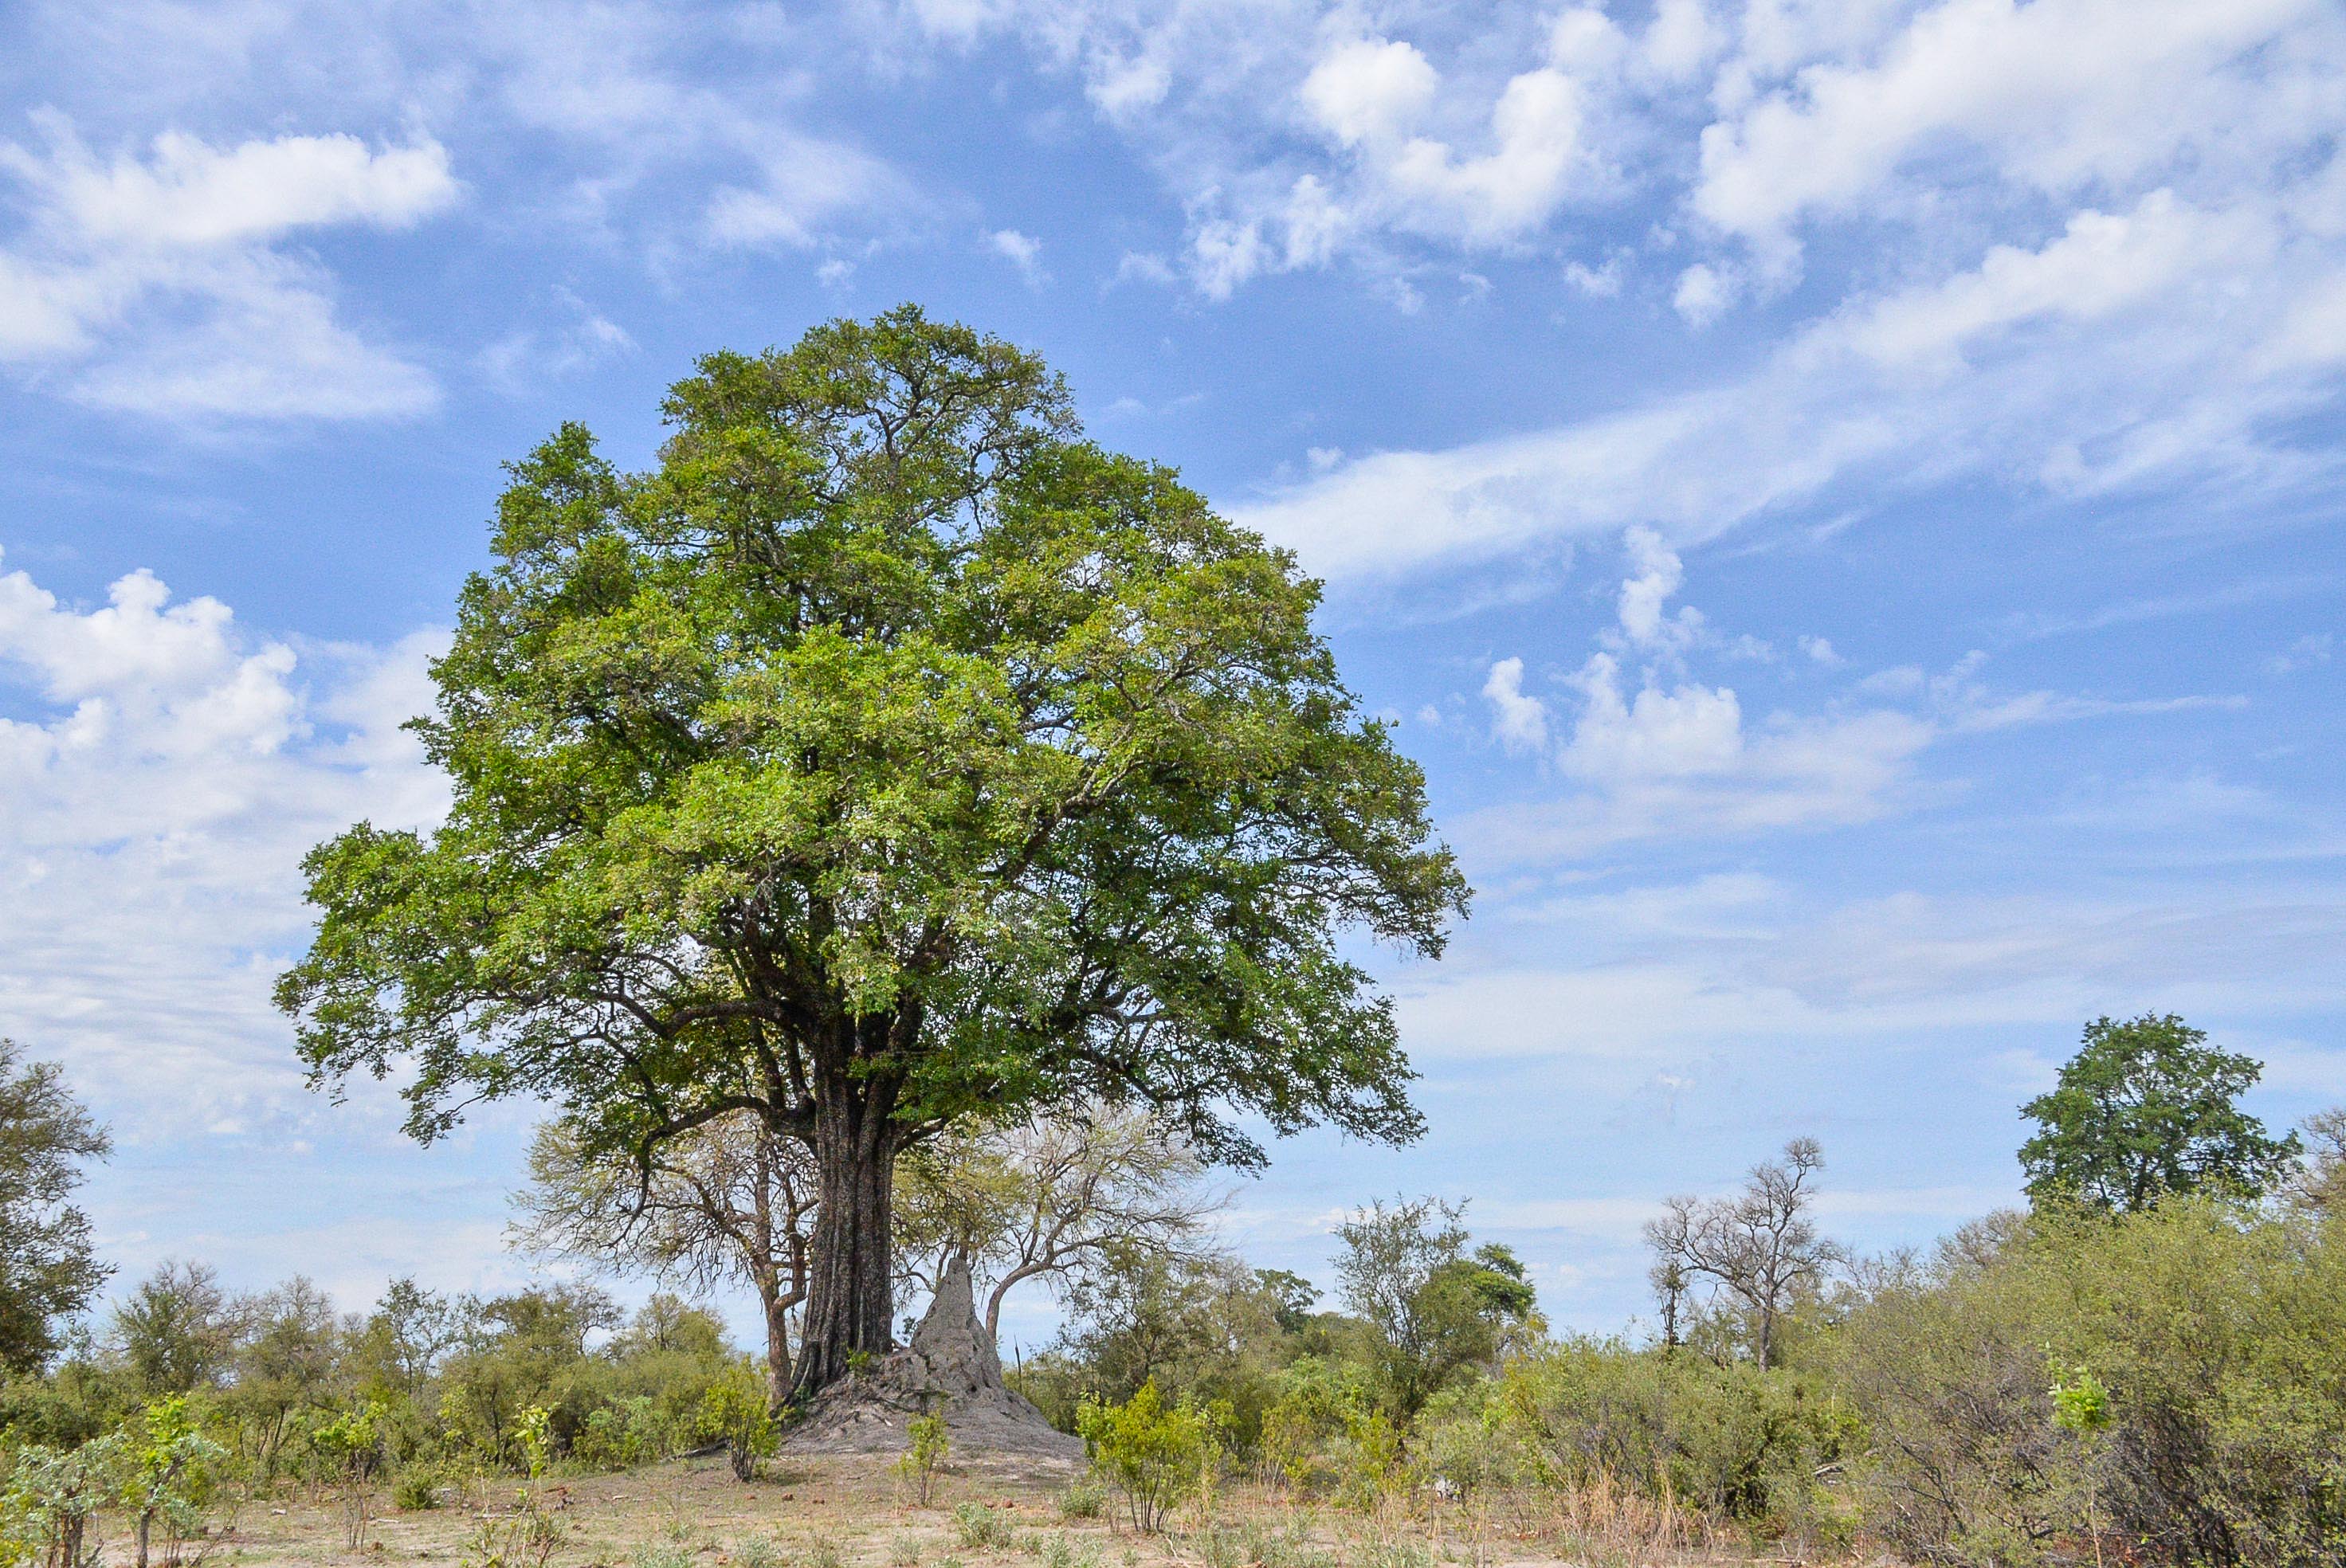 Termitière (Termite mound) supportant un arbre Fromager, ou Kapokier (Kapok, Ceiba pentandra ssp guineensis),  Kwando Reserve, Delta de l'Okavango, Botswana.